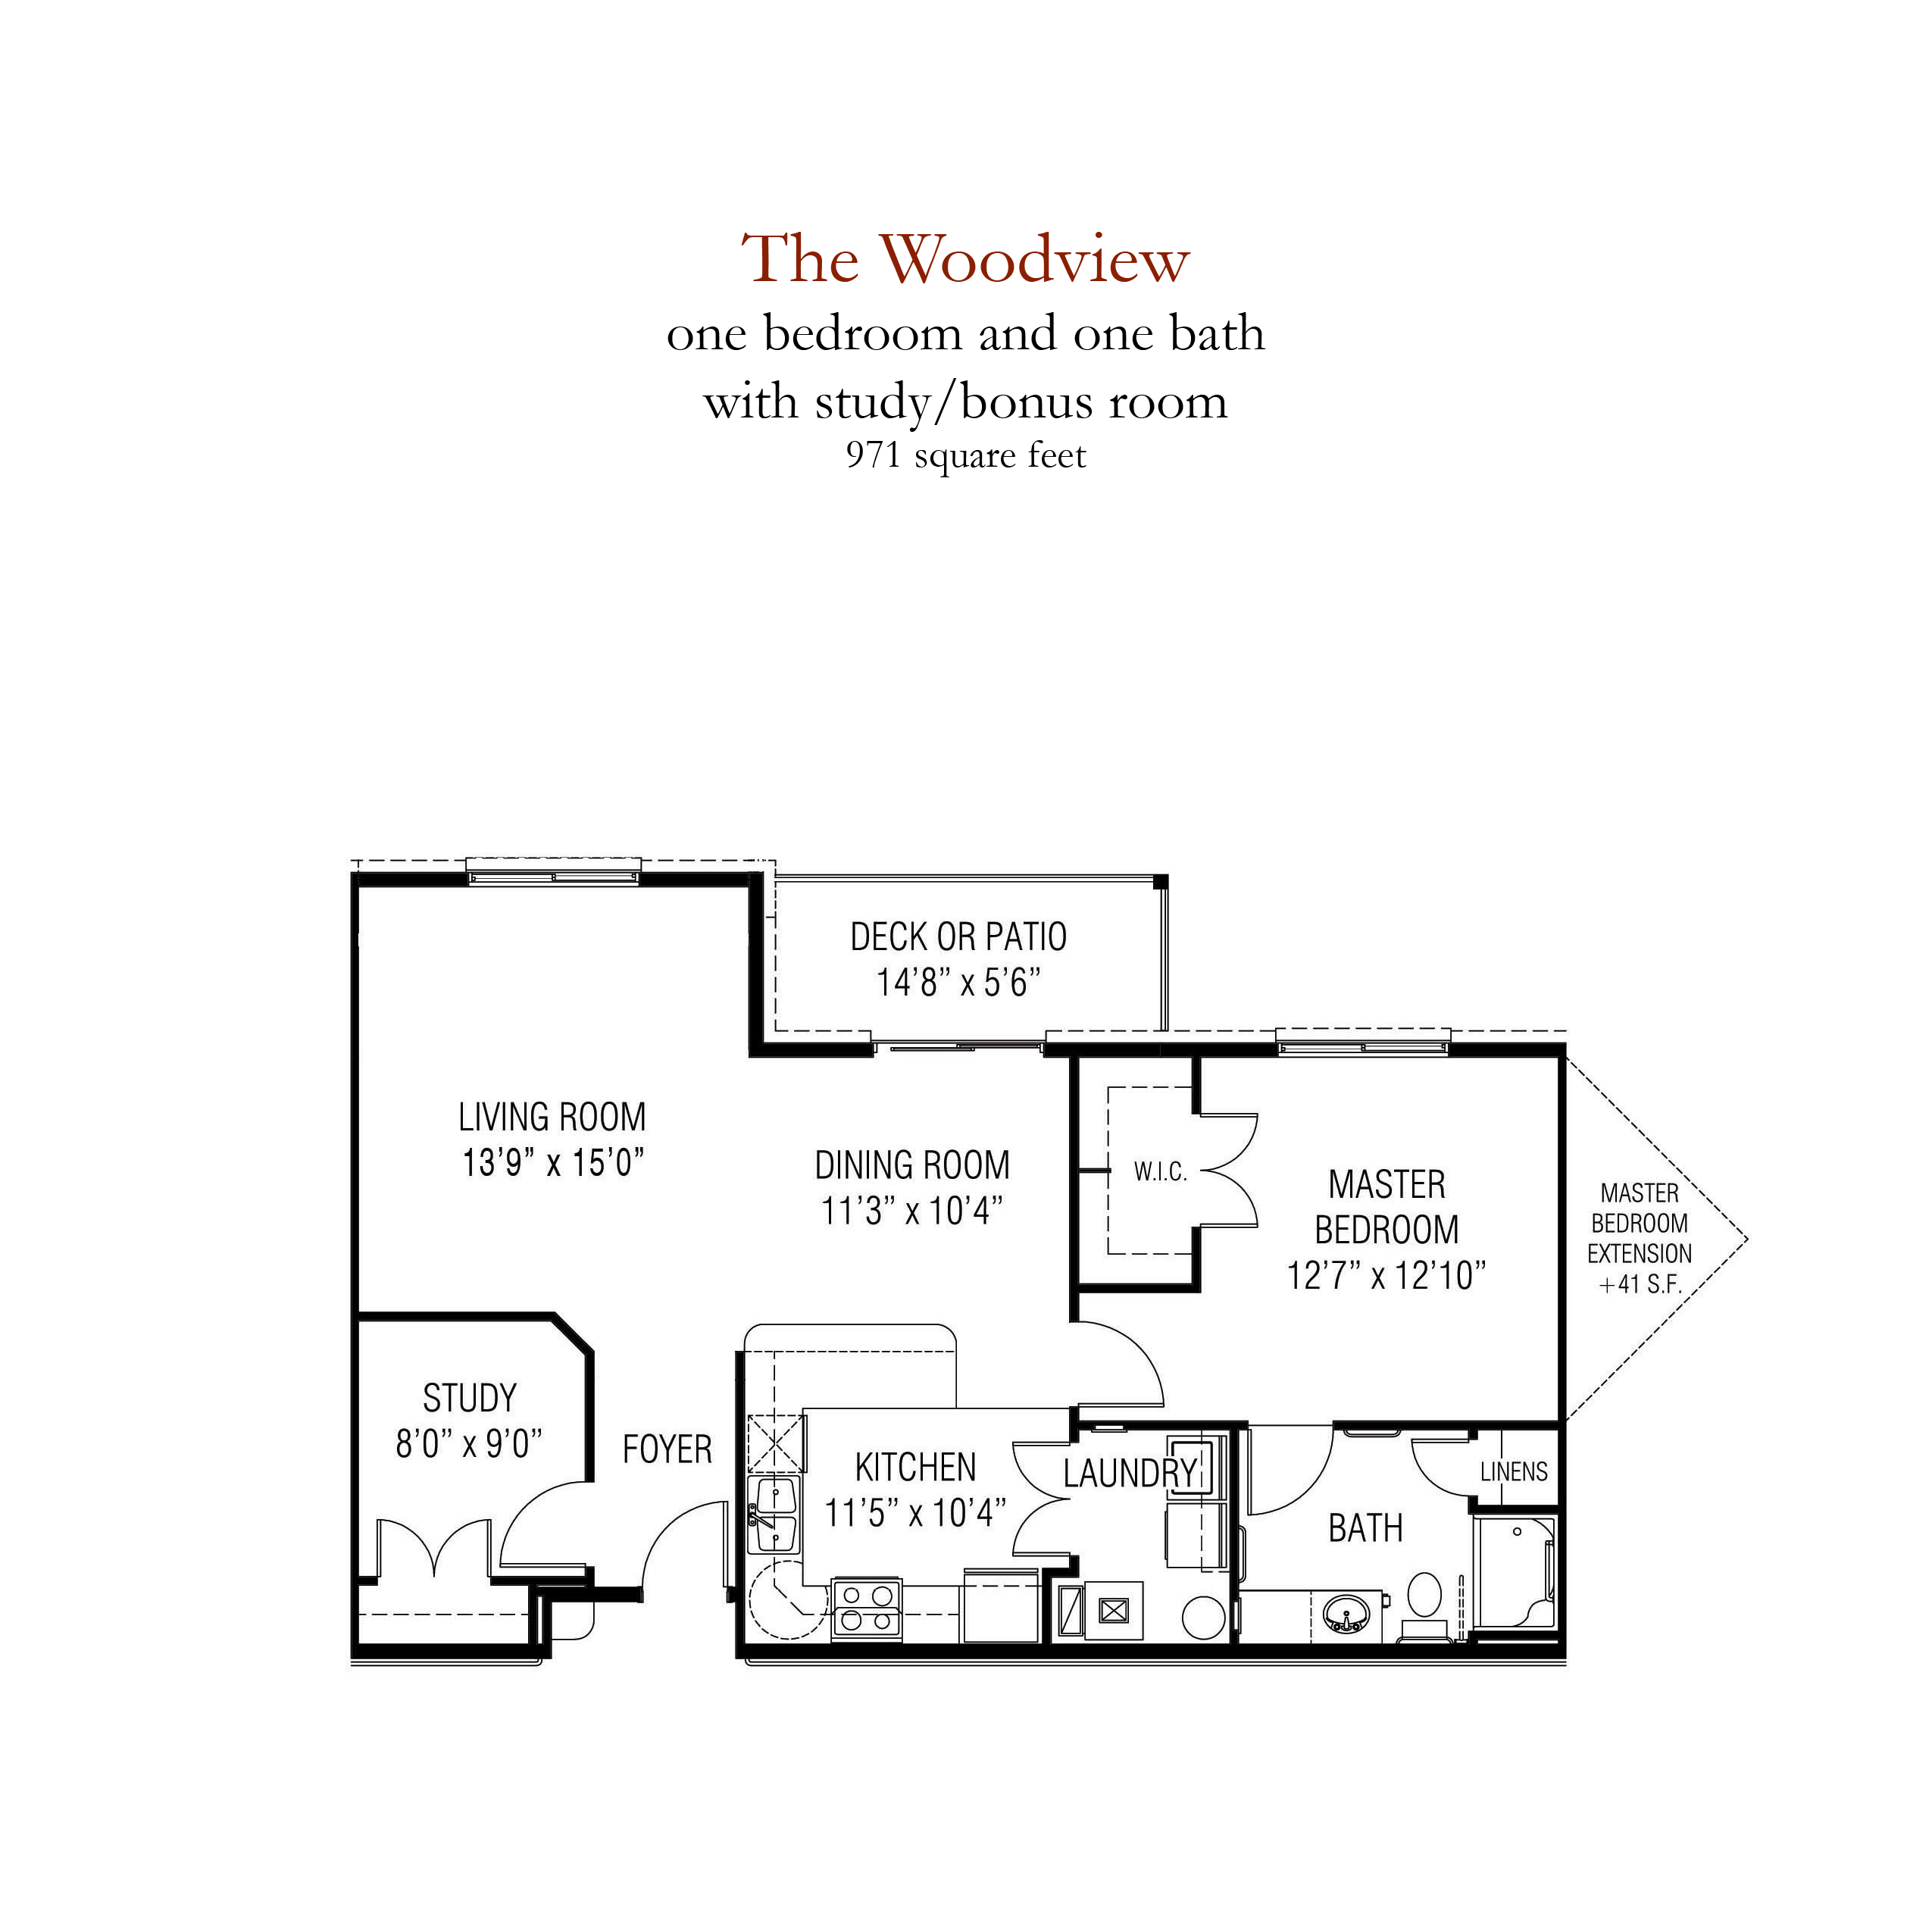 The Woodview senior living - 1 bedroom and 1 bathroom floor plan